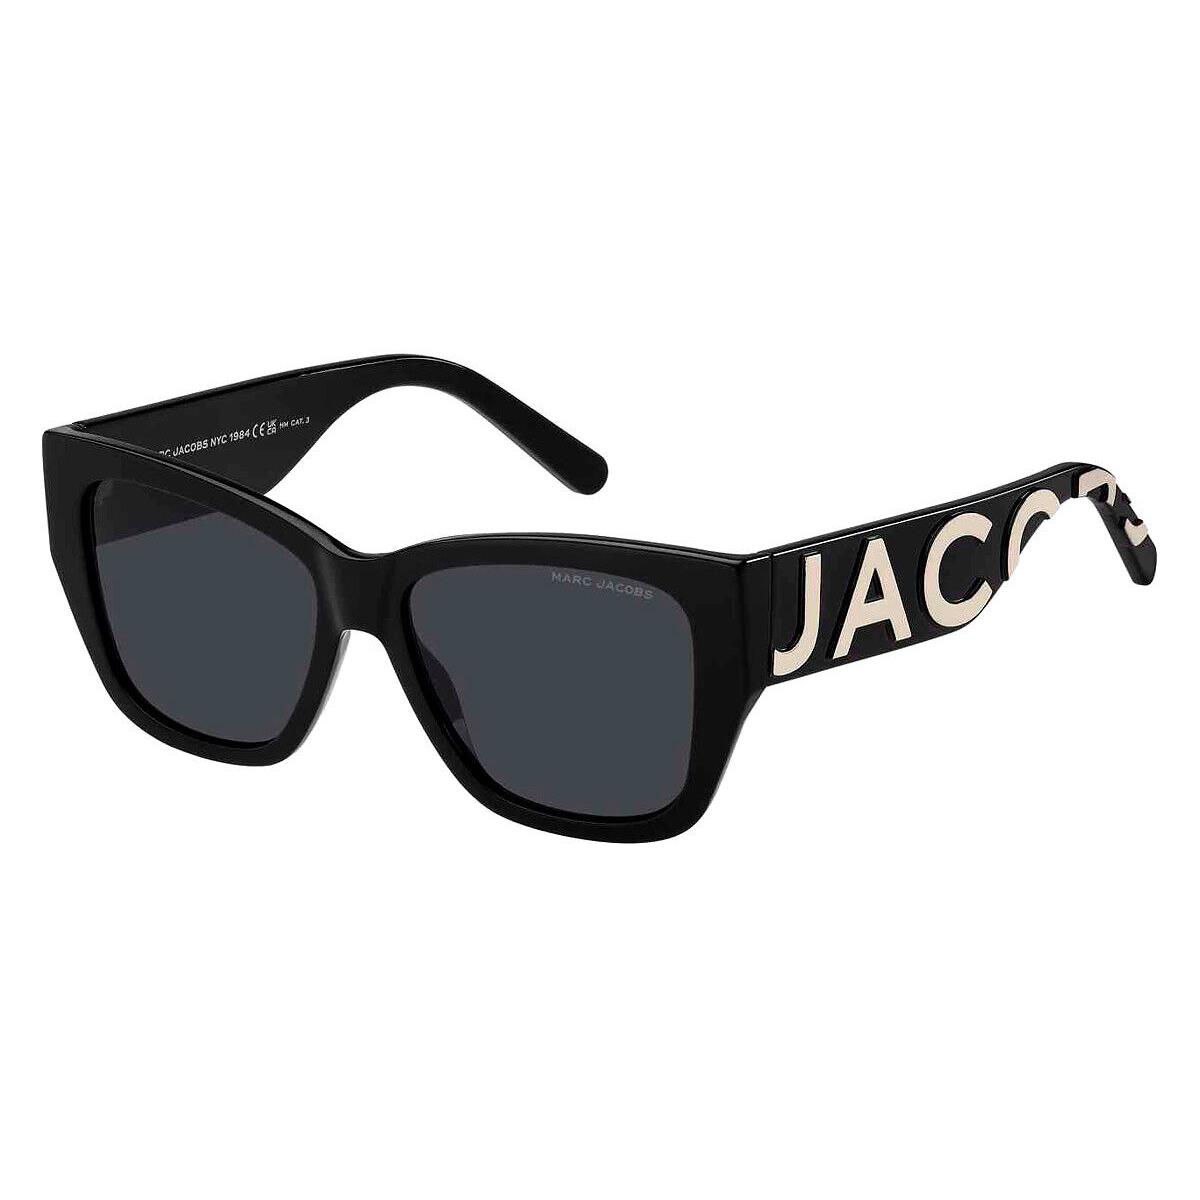 Marc Jacobs Mjb Sunglasses Black White / Gray AR 080S2K 55mm